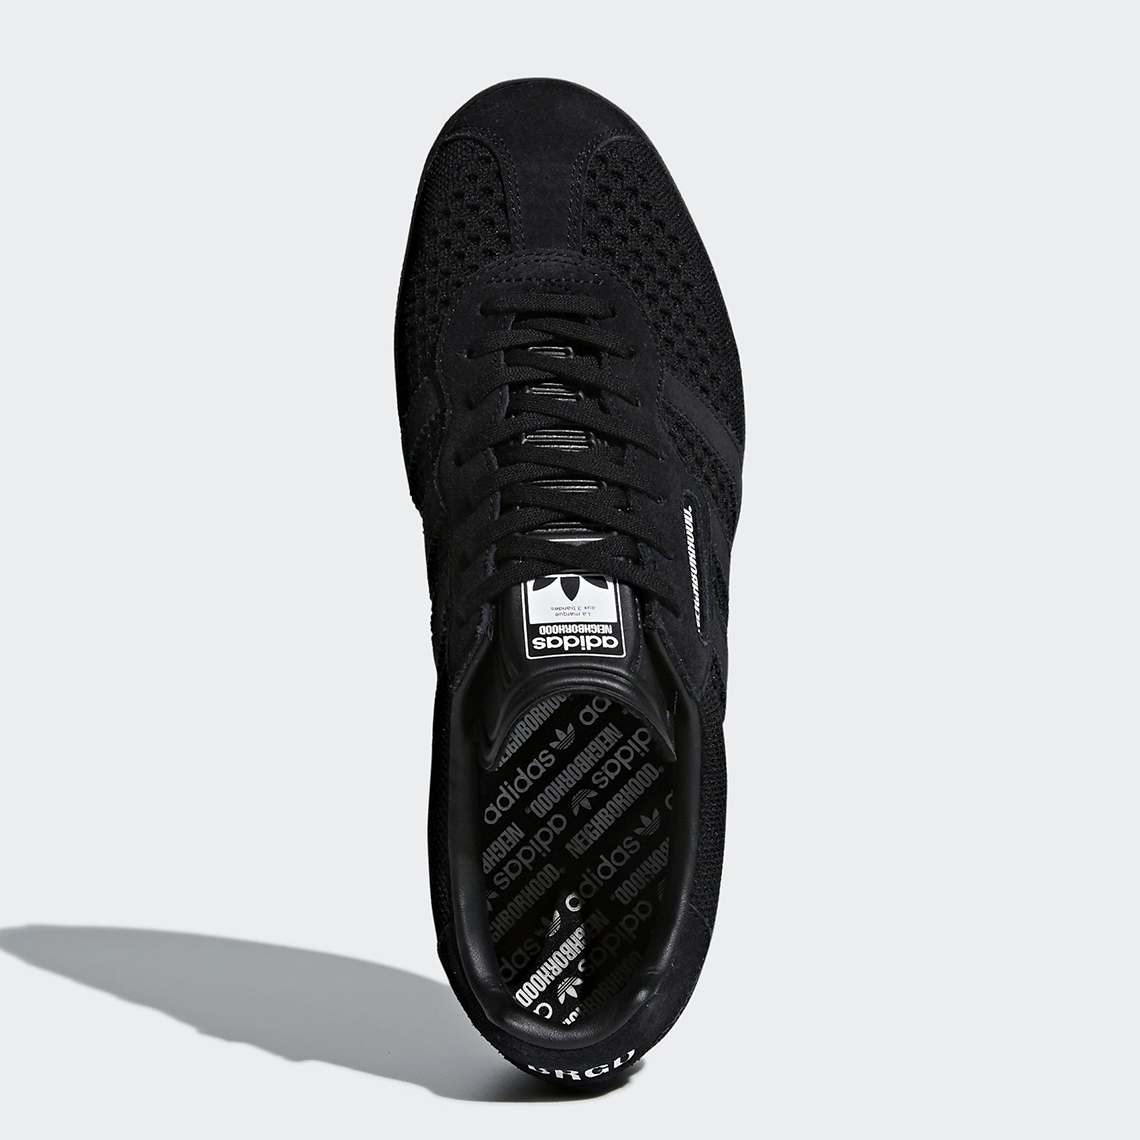 NEIGHBORHOOD x adidas Four-Shoe Collaboration Release Info 